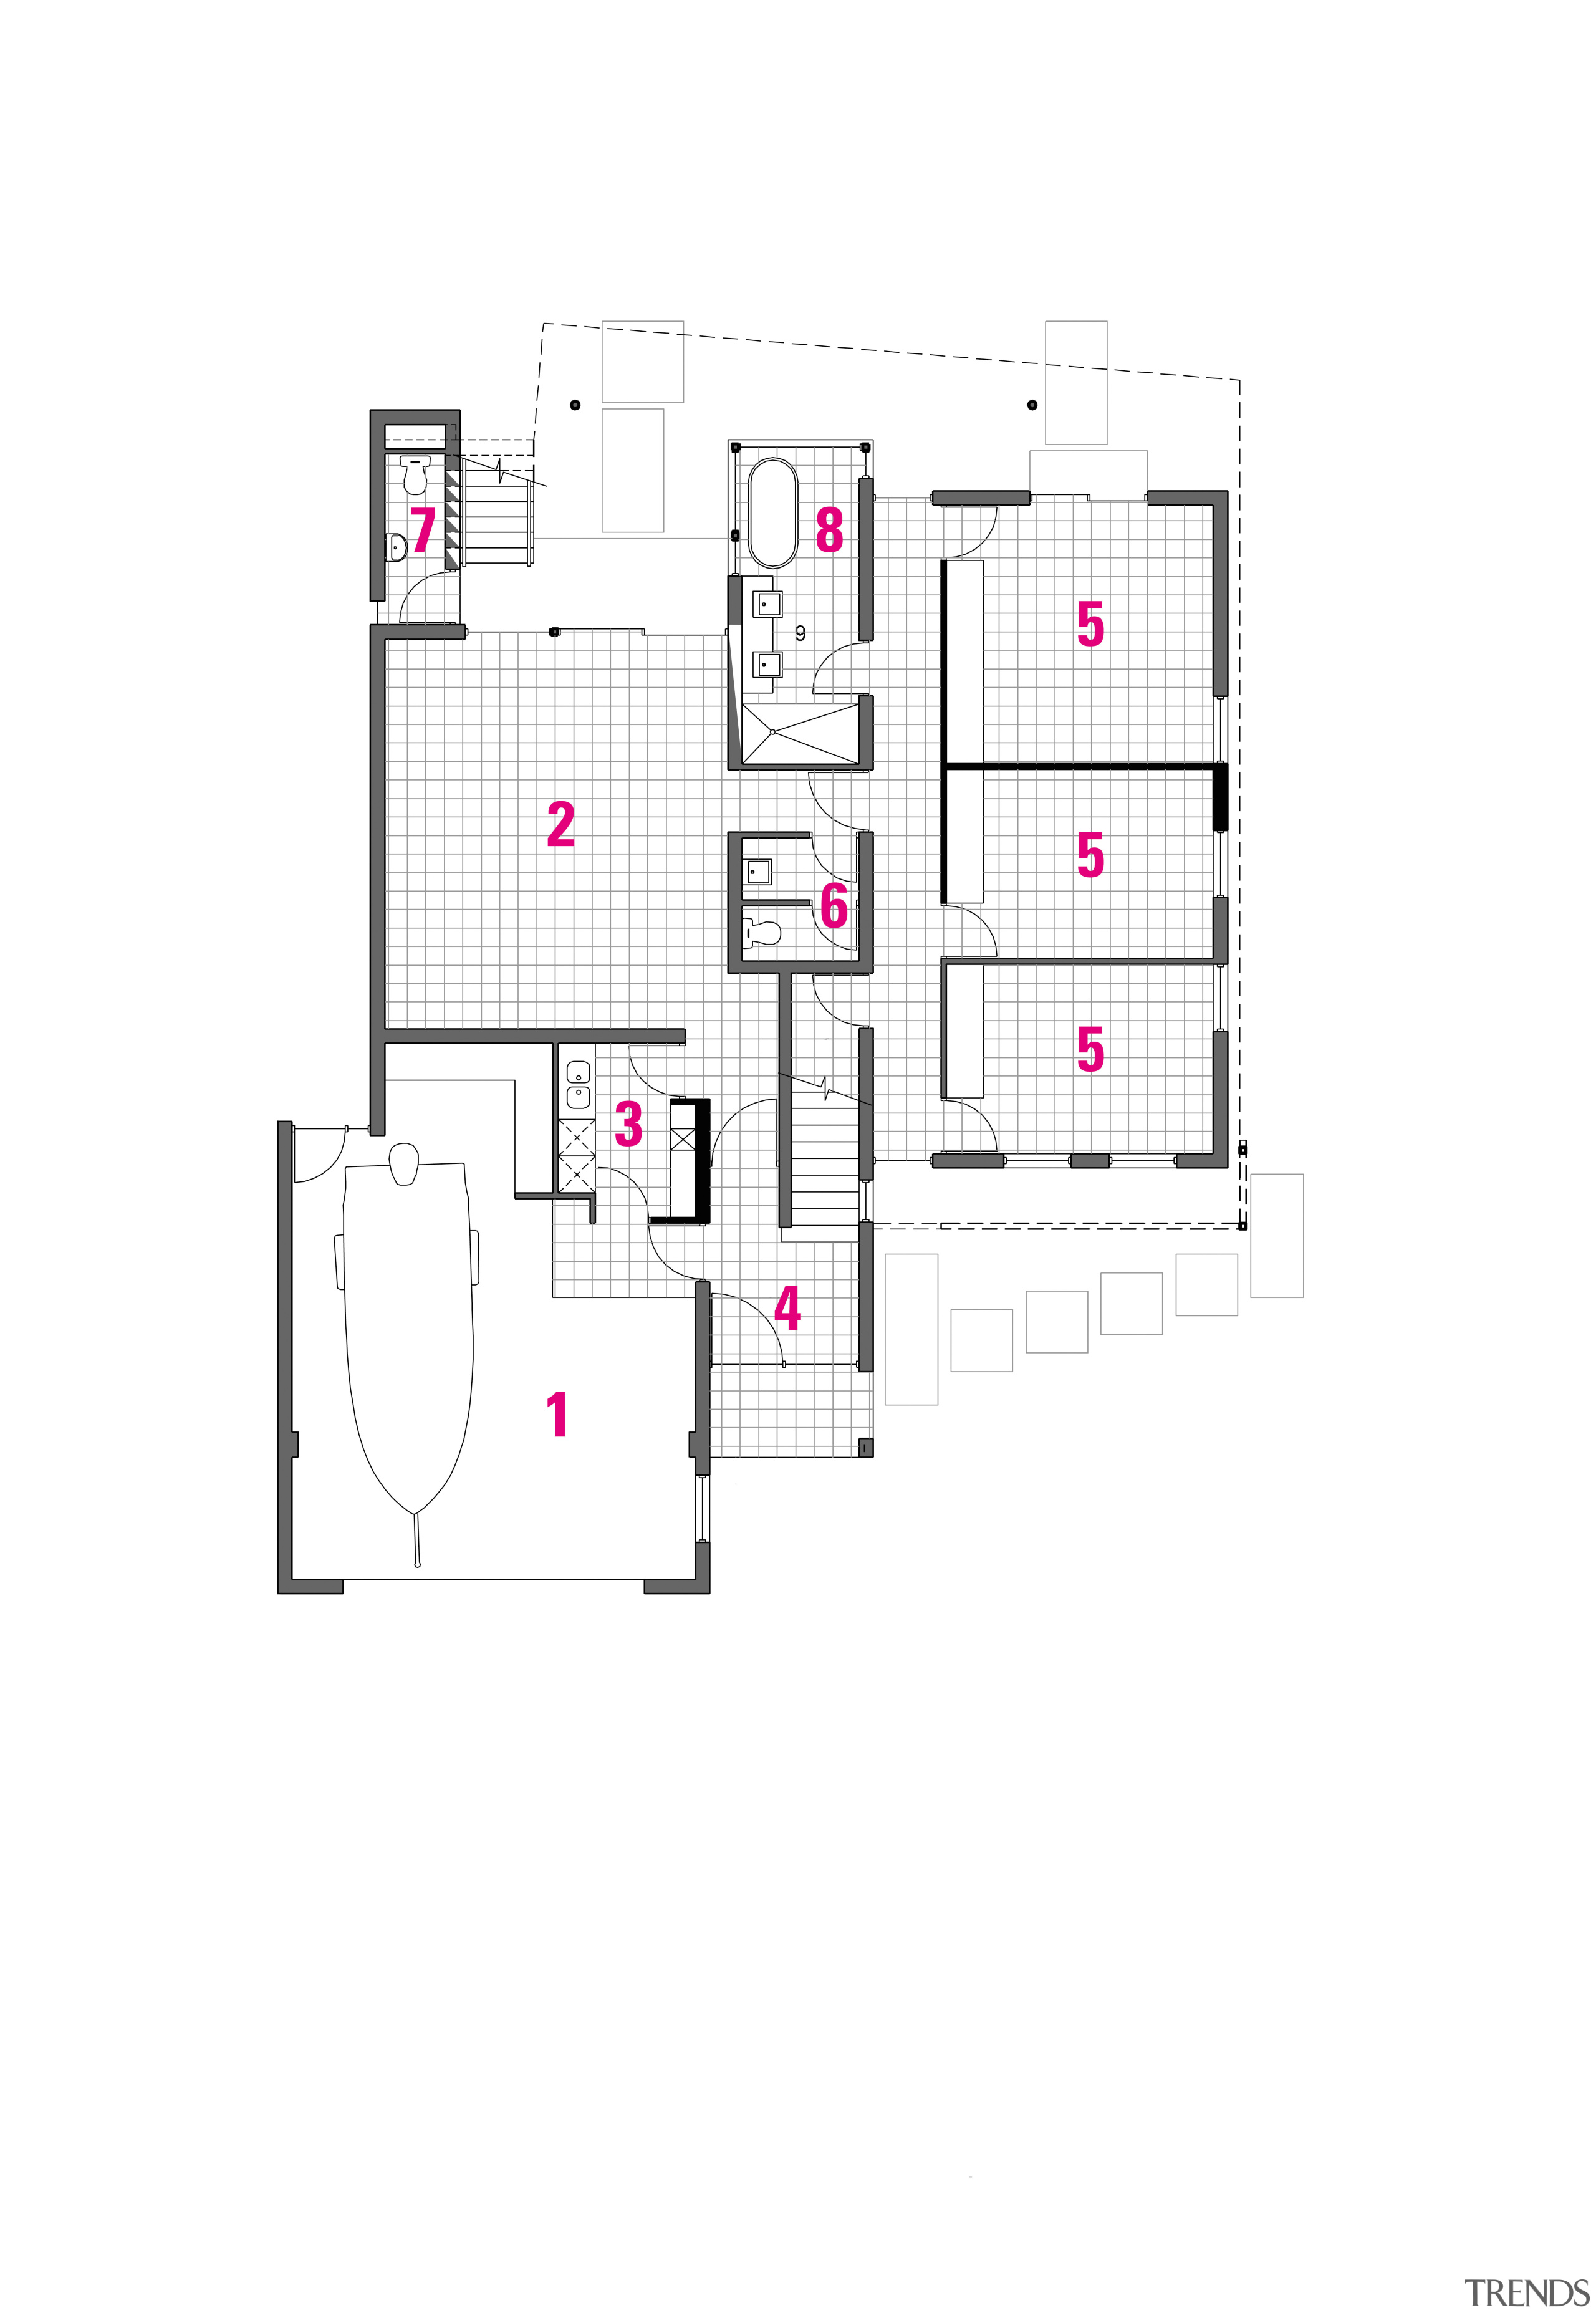 Floor plan of this beachside home - Floor area, design, diagram, floor plan, line, plan, product design, schematic, text, white